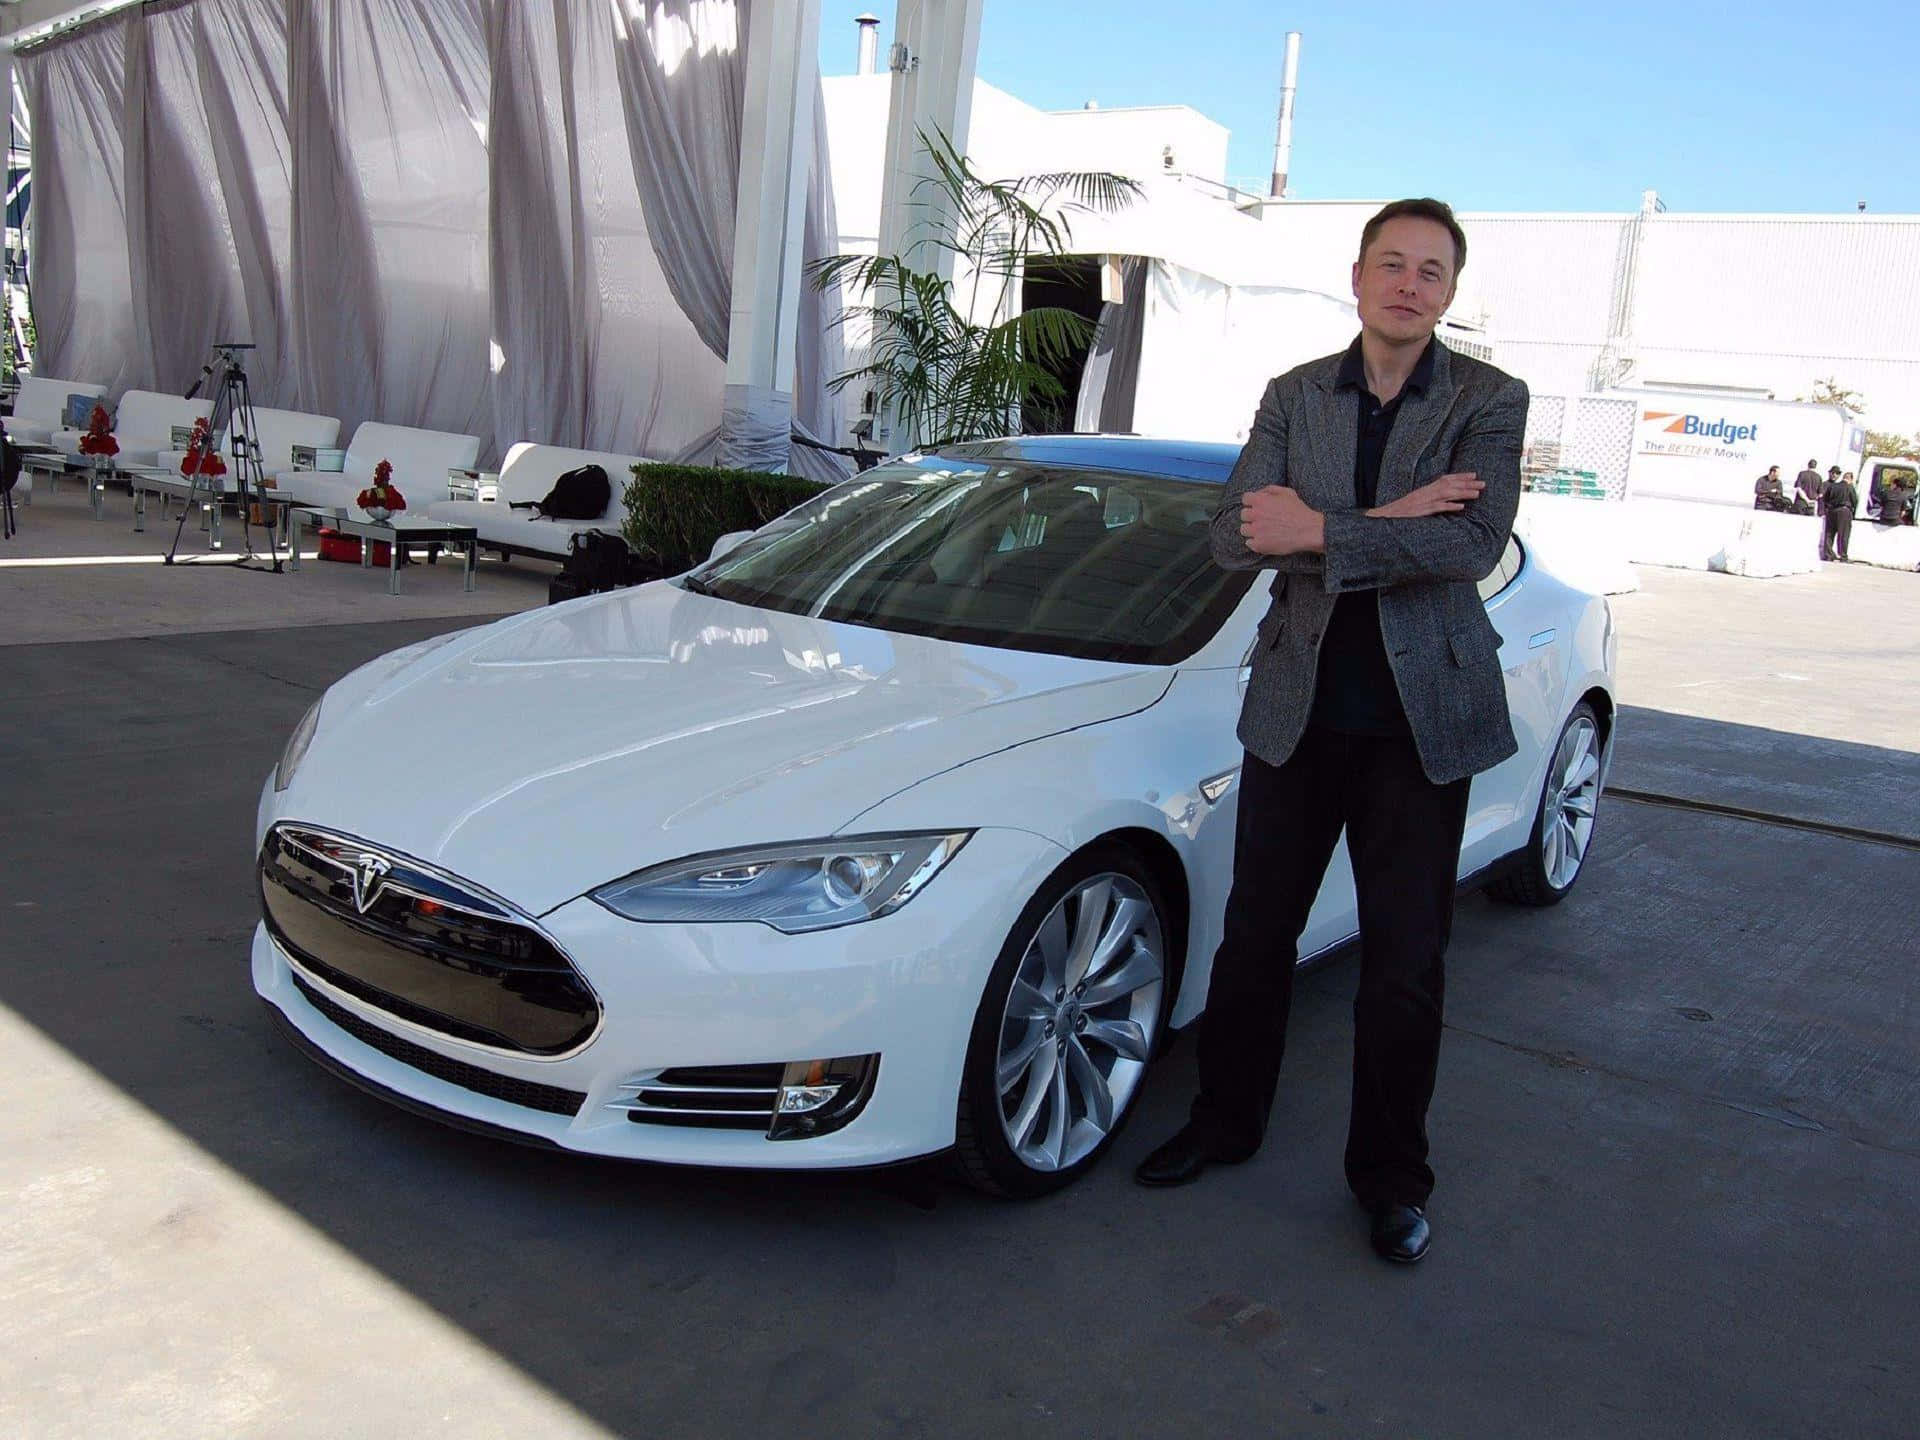 Engineer&Entrepreneur Elon Musk